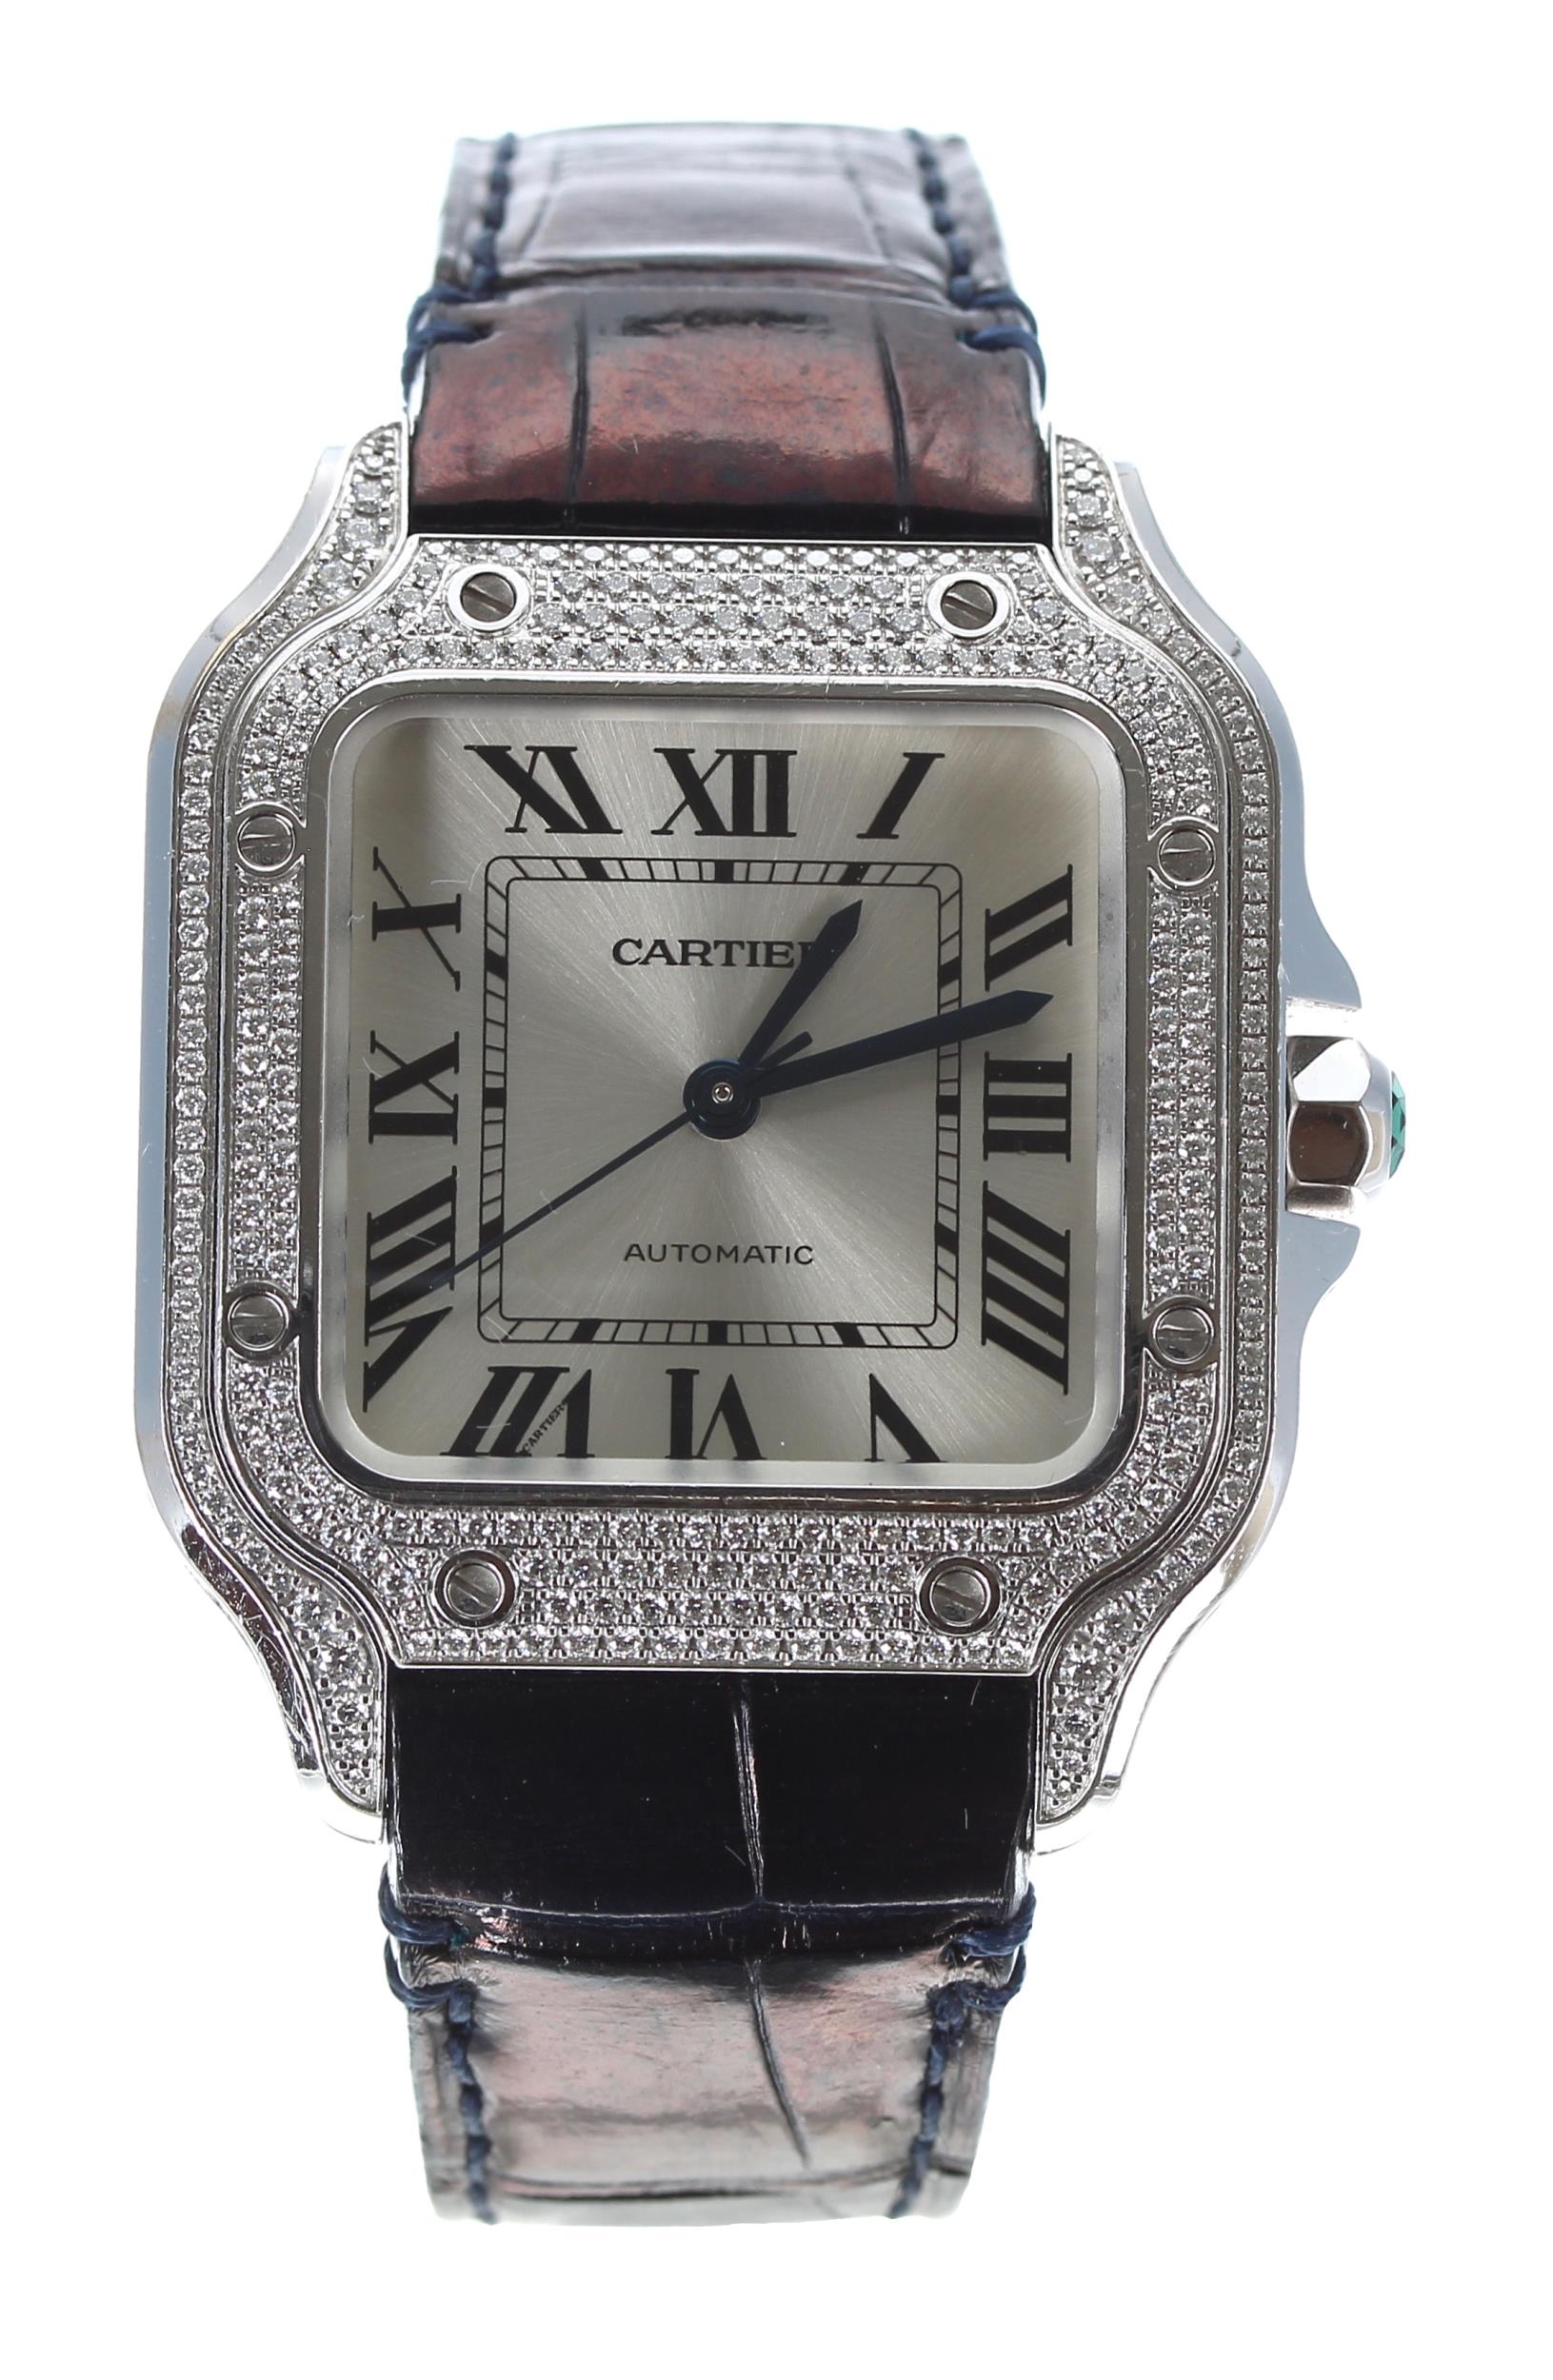 Cartier Santos 18ct white gold diamond set automatic wristwatch, reference no. 4190, serial no.